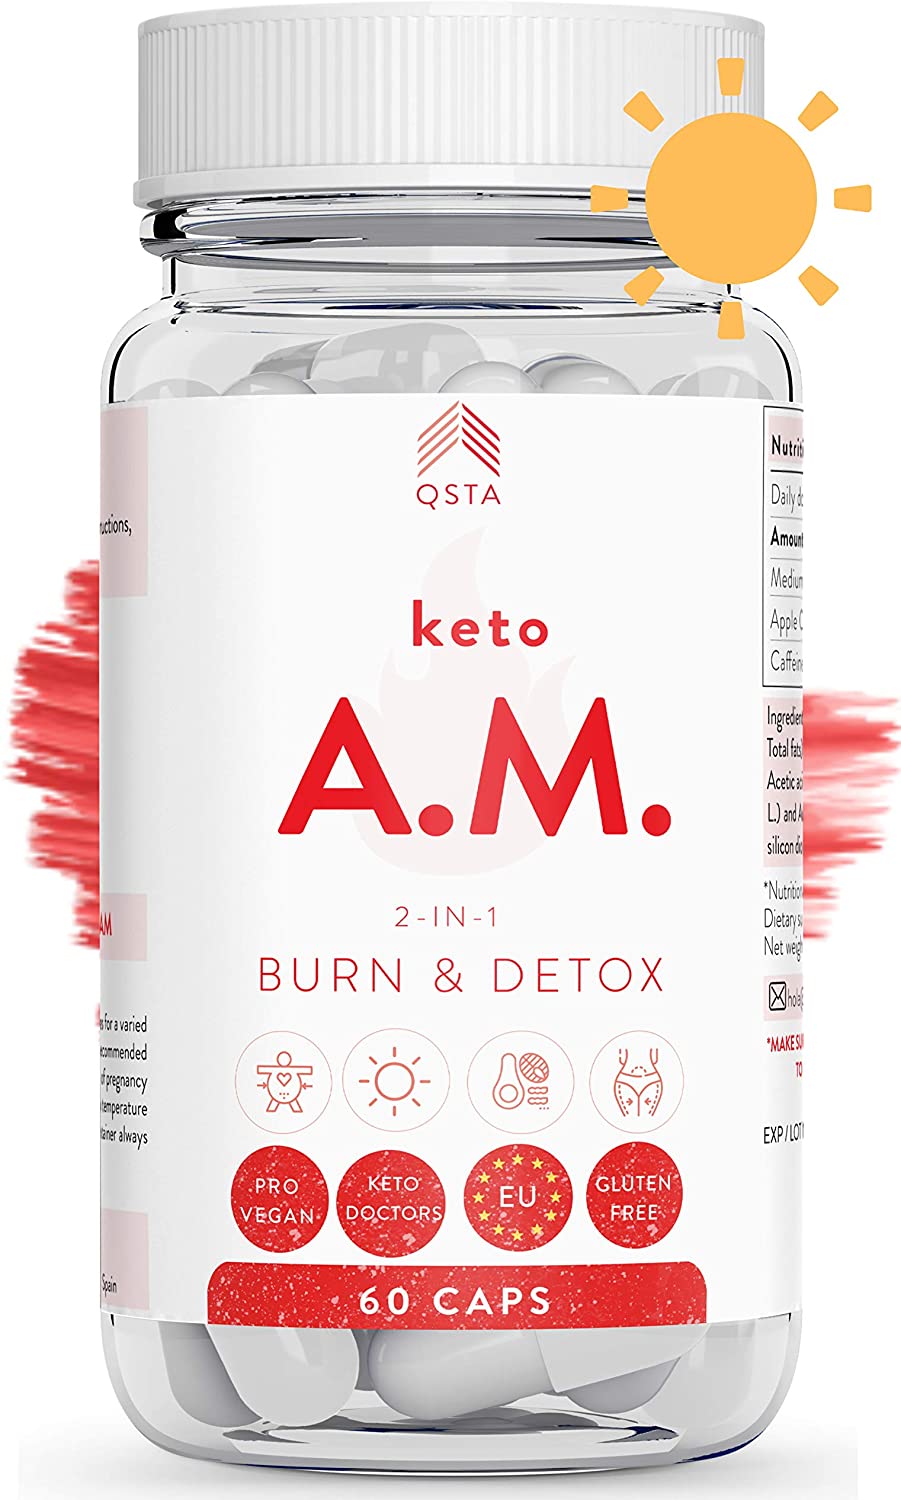 Keto Plus Original AM (45 DIAS) - Quemagrasas potente para adelgazar y rapido